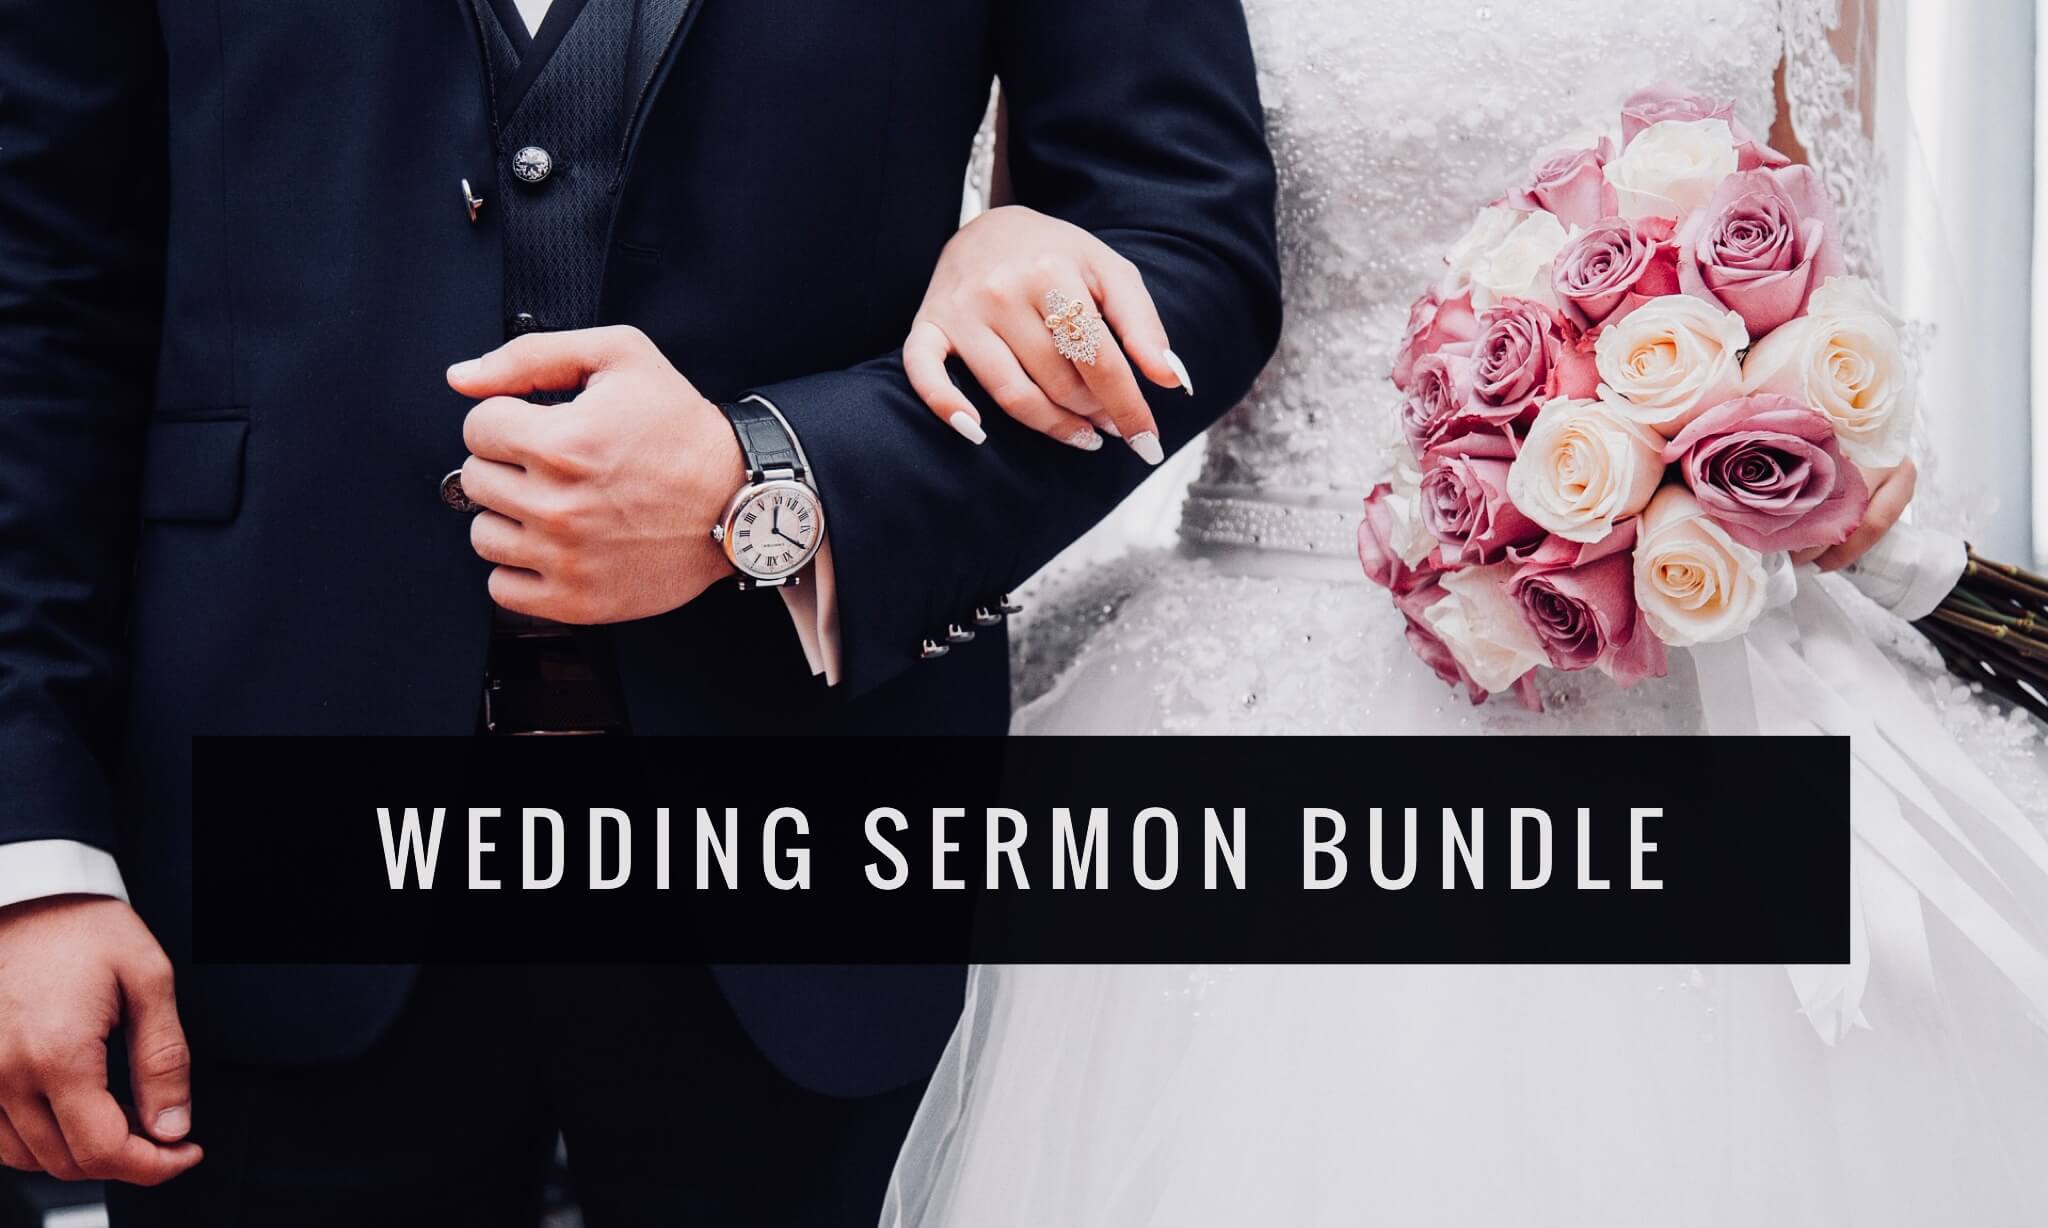 Wedding Sermon Bundle